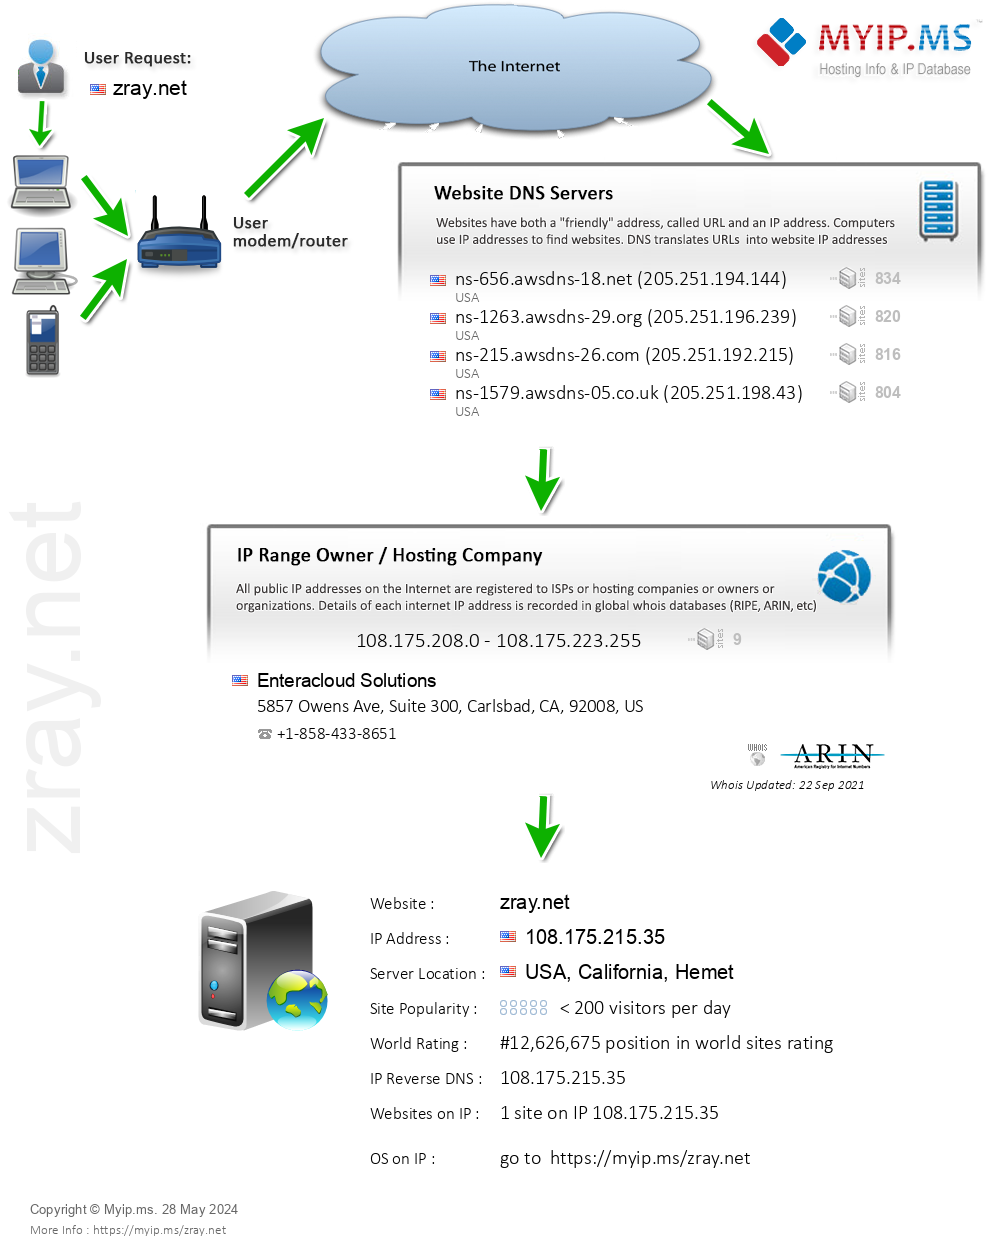 Zray.net - Website Hosting Visual IP Diagram